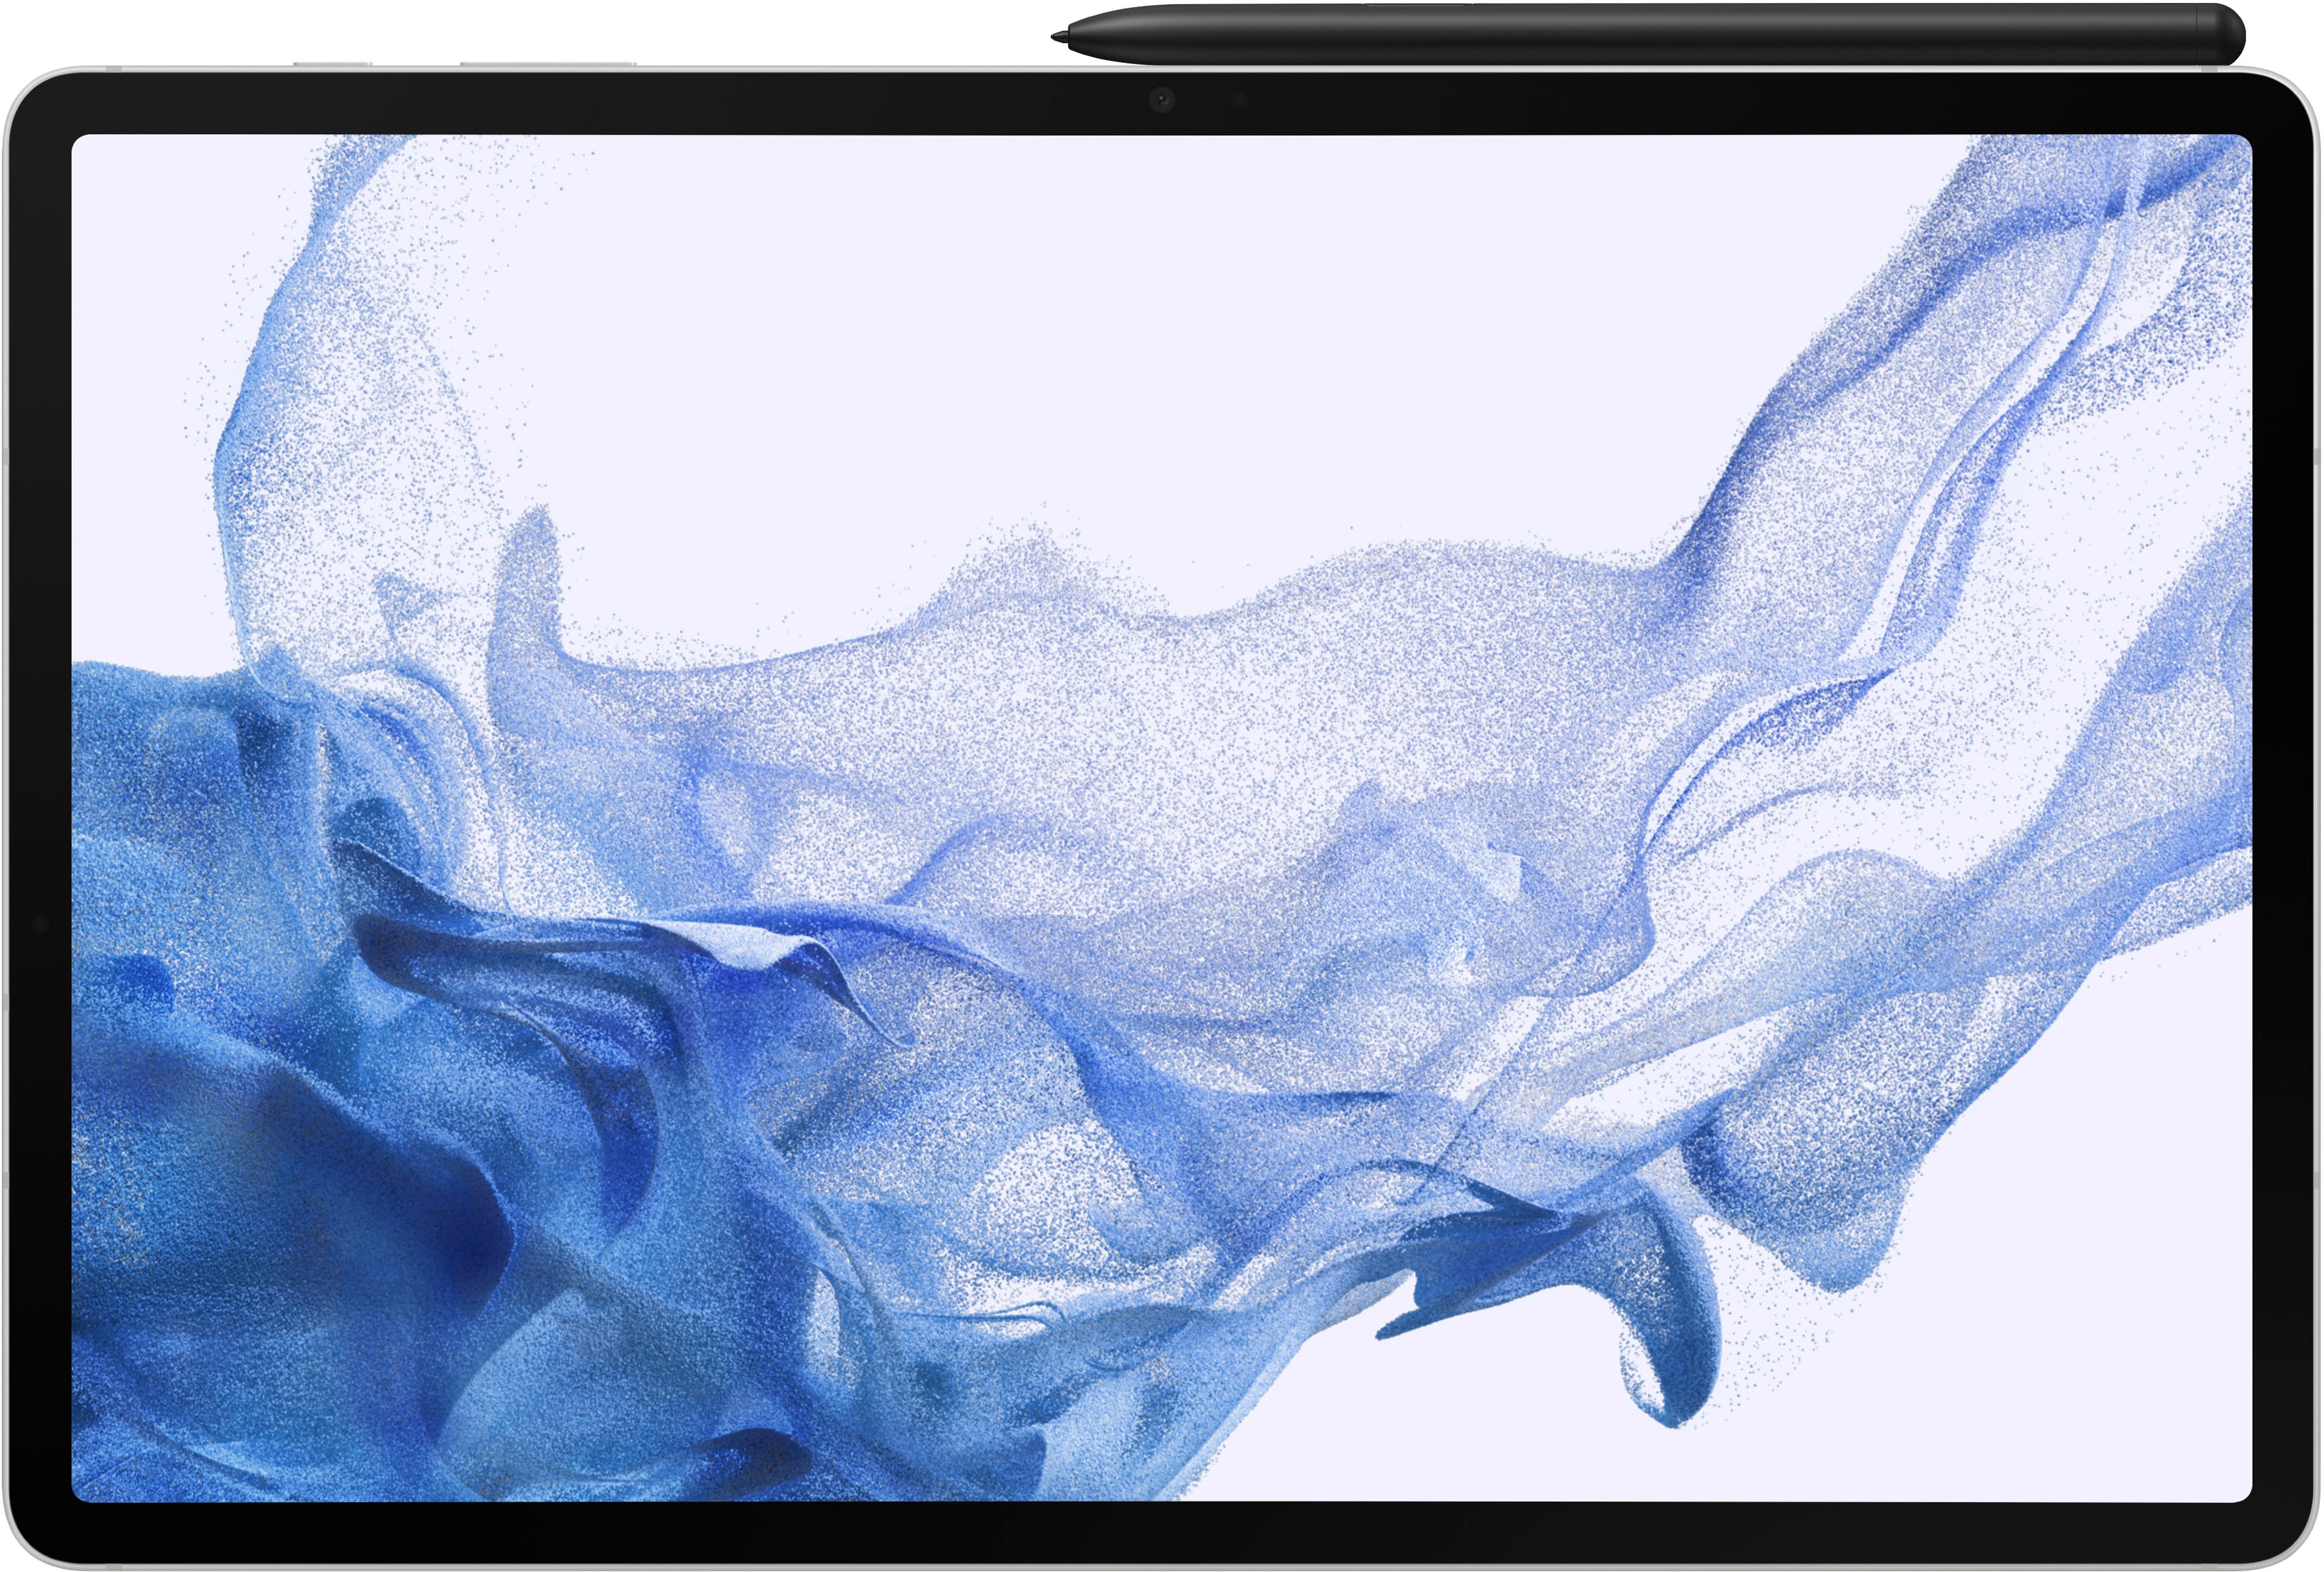 Samsung Galaxy Tab S8 Plus review: A multitasking powerhouse